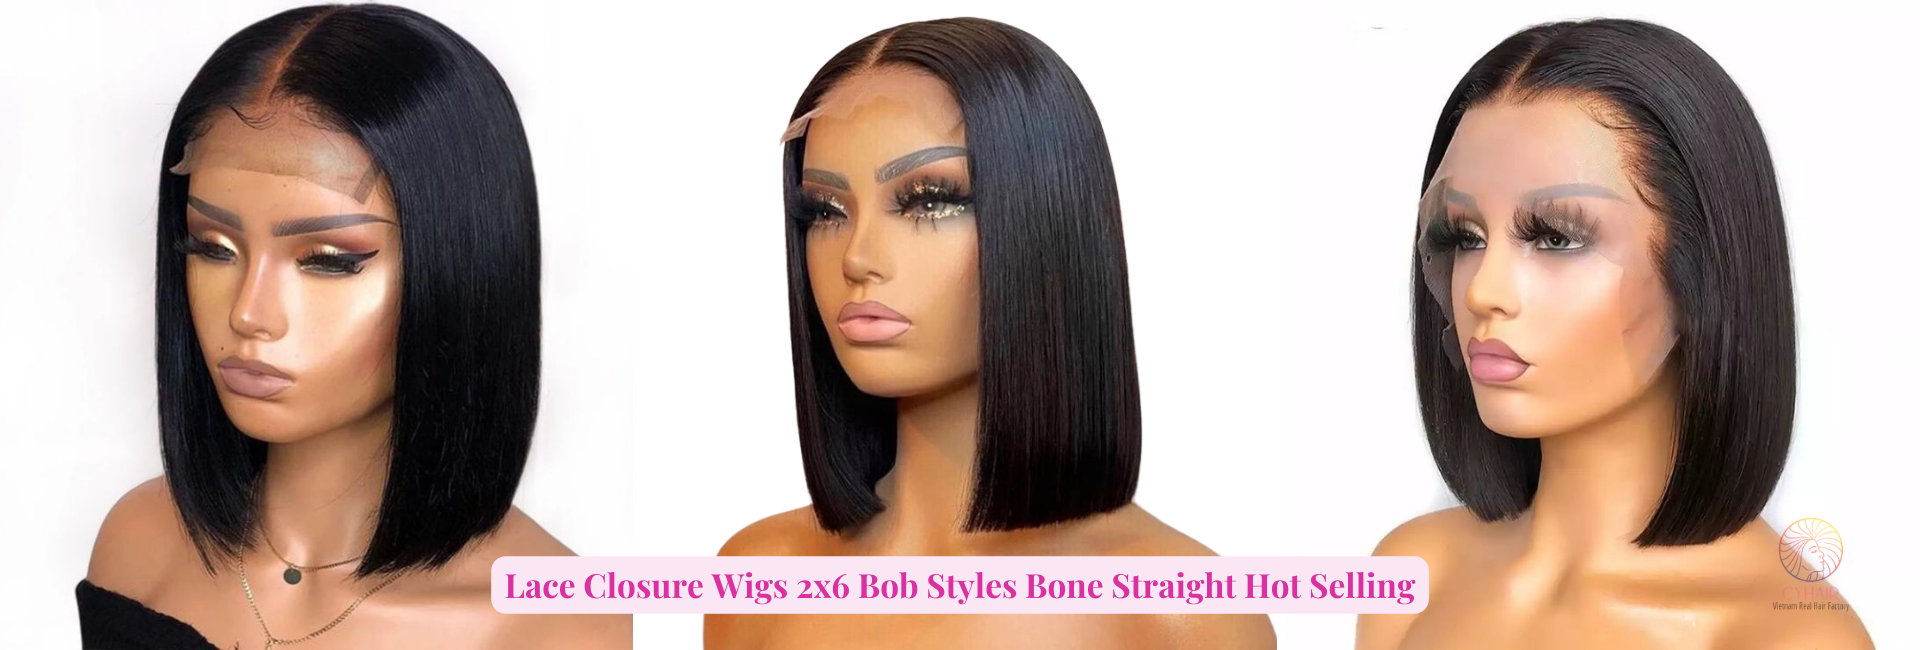 Lace Closure Wigs 2x6 Bob Styles Bone Straight Hot Selling